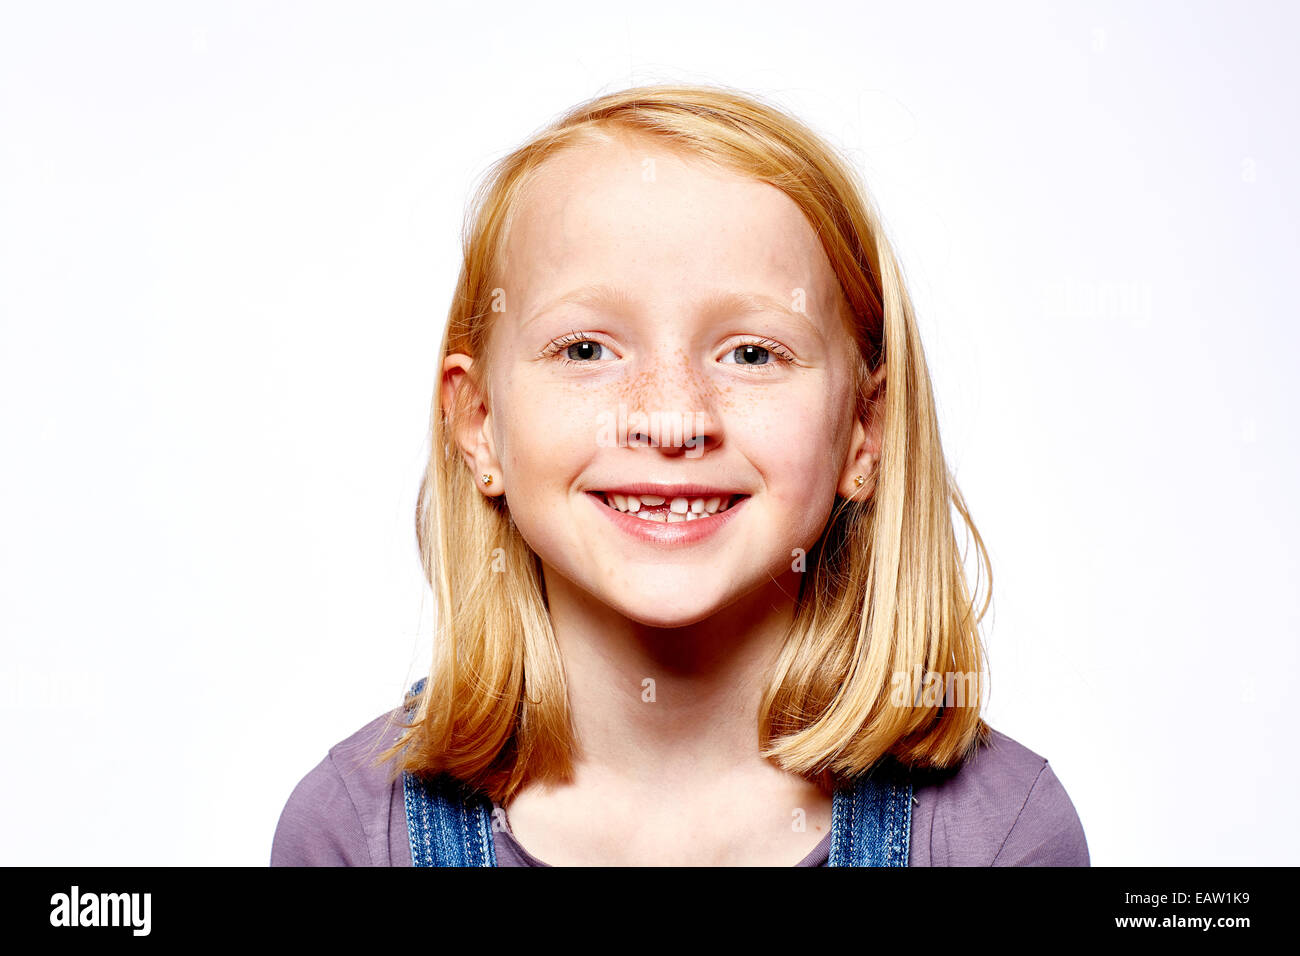 young girl smile Stock Photo